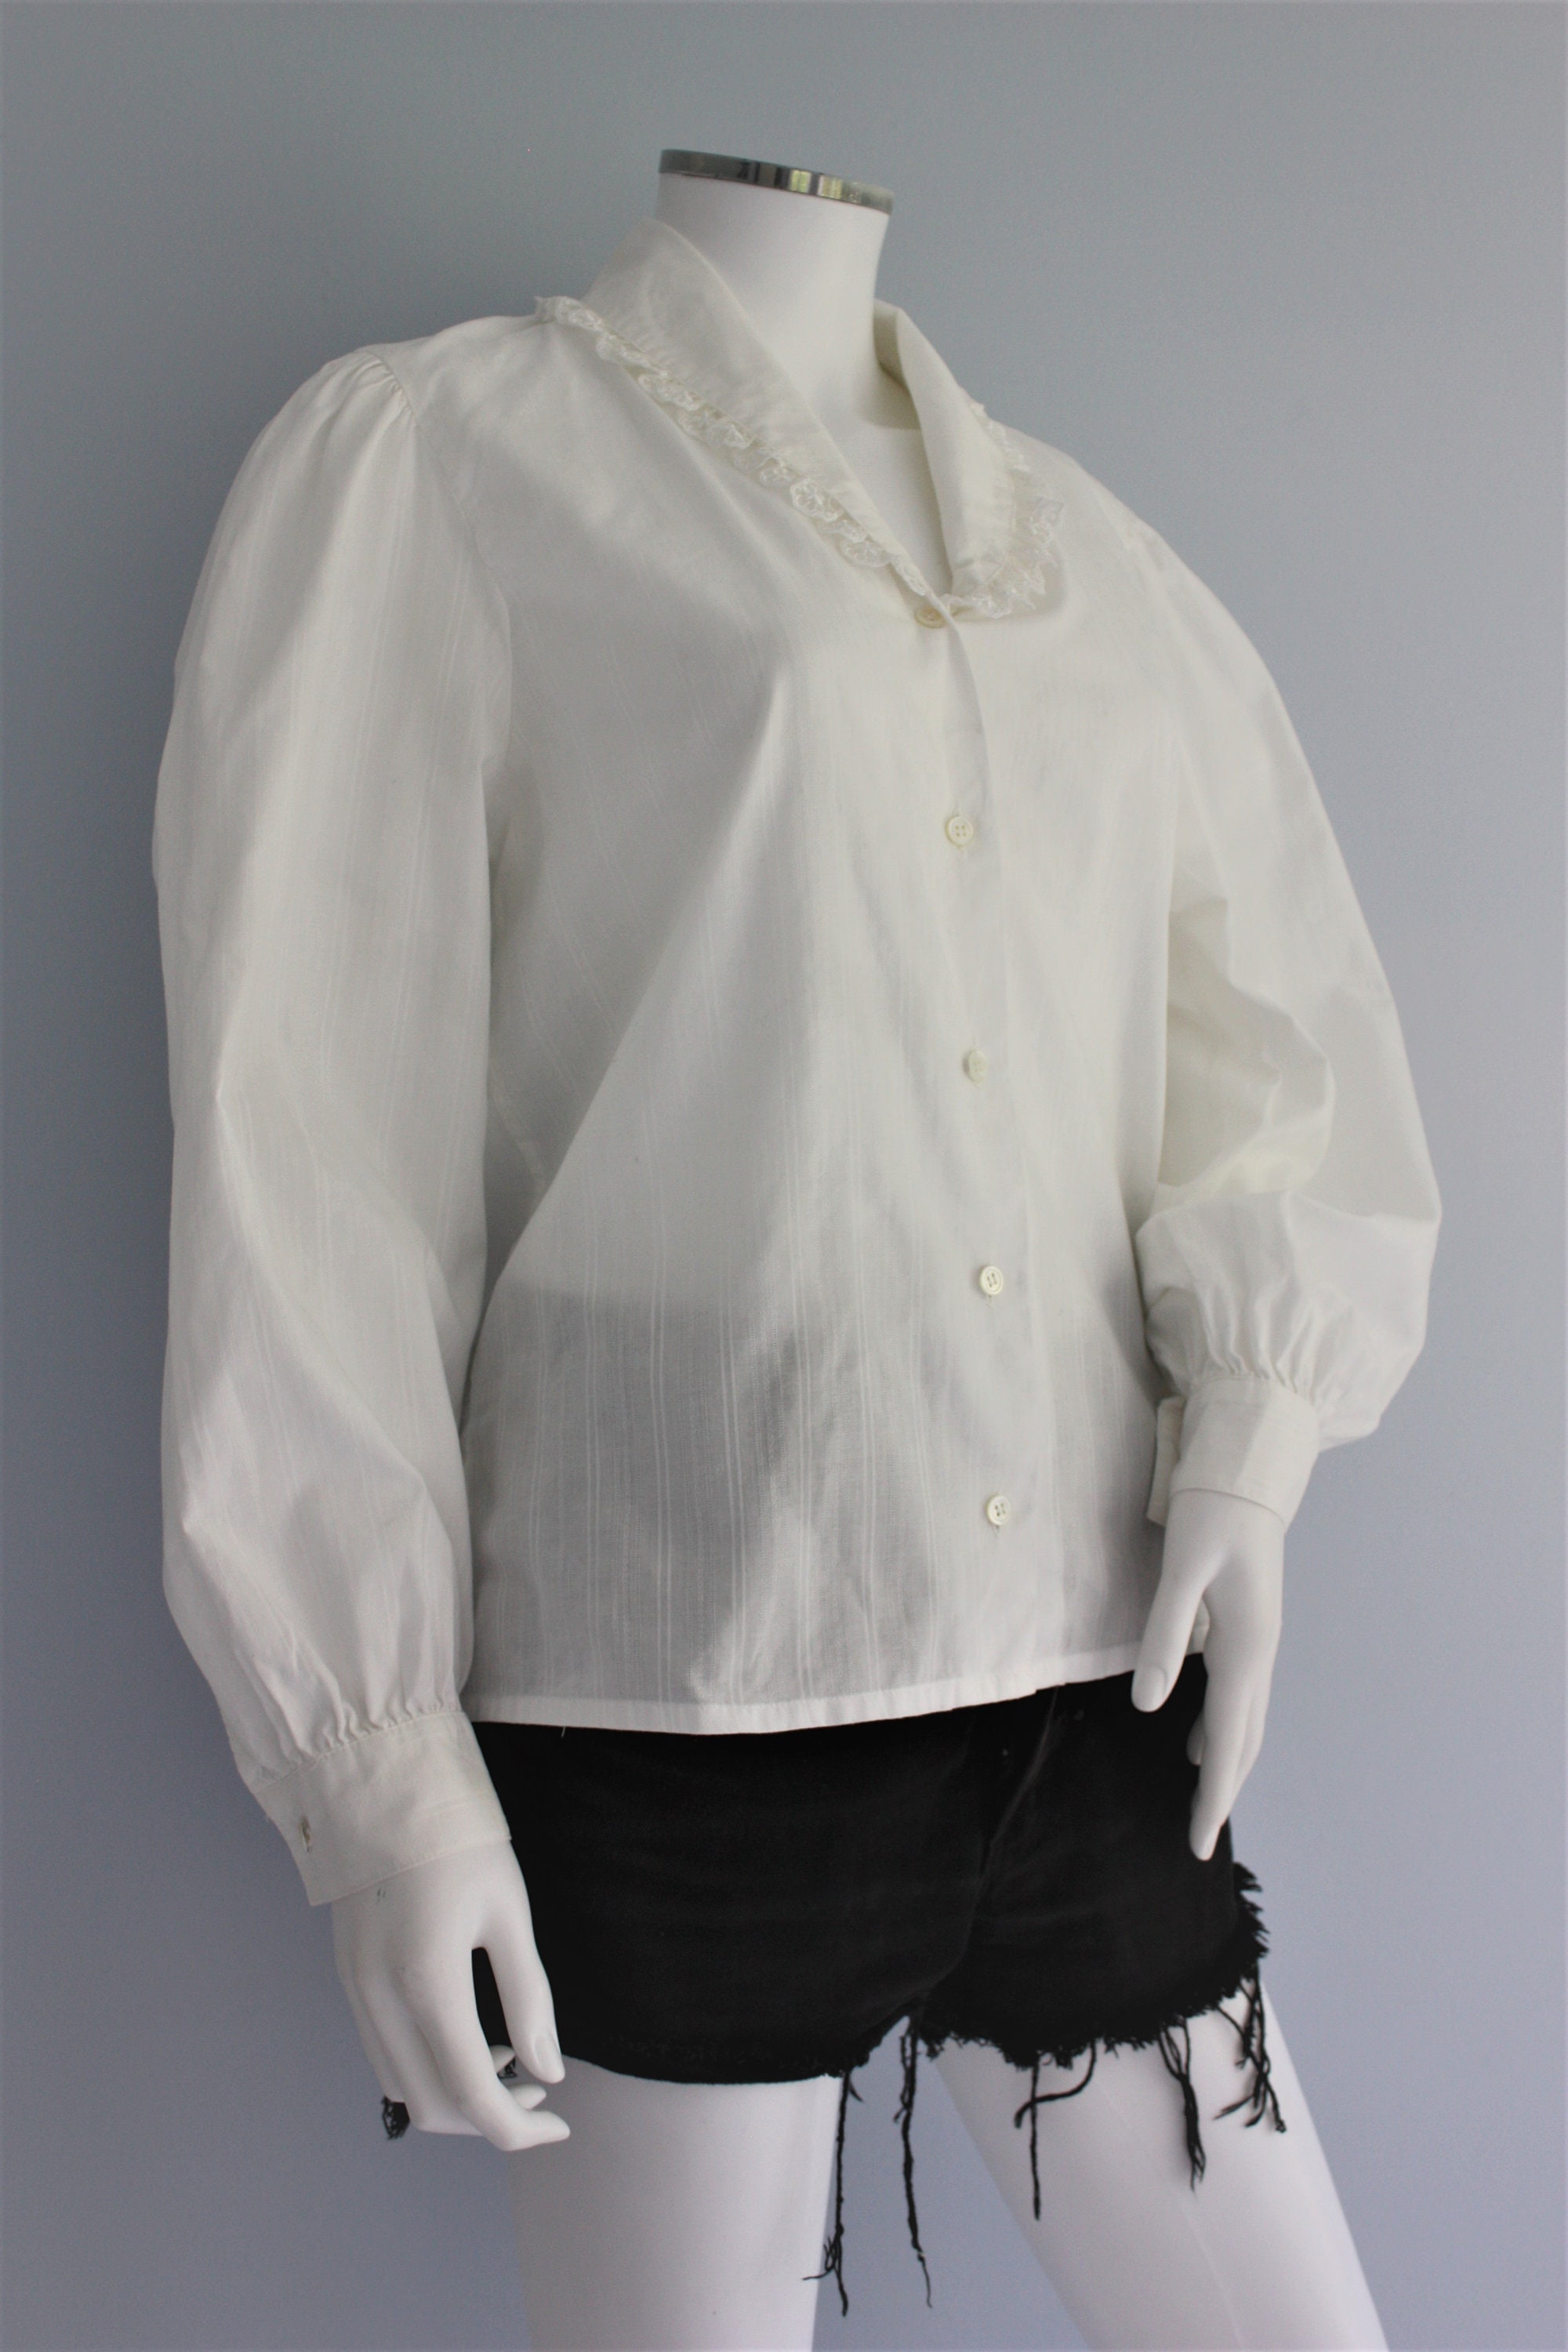 LAURA ASHLEY White Cotton Blouse PIRATE Style Shirt With Lace | Etsy UK